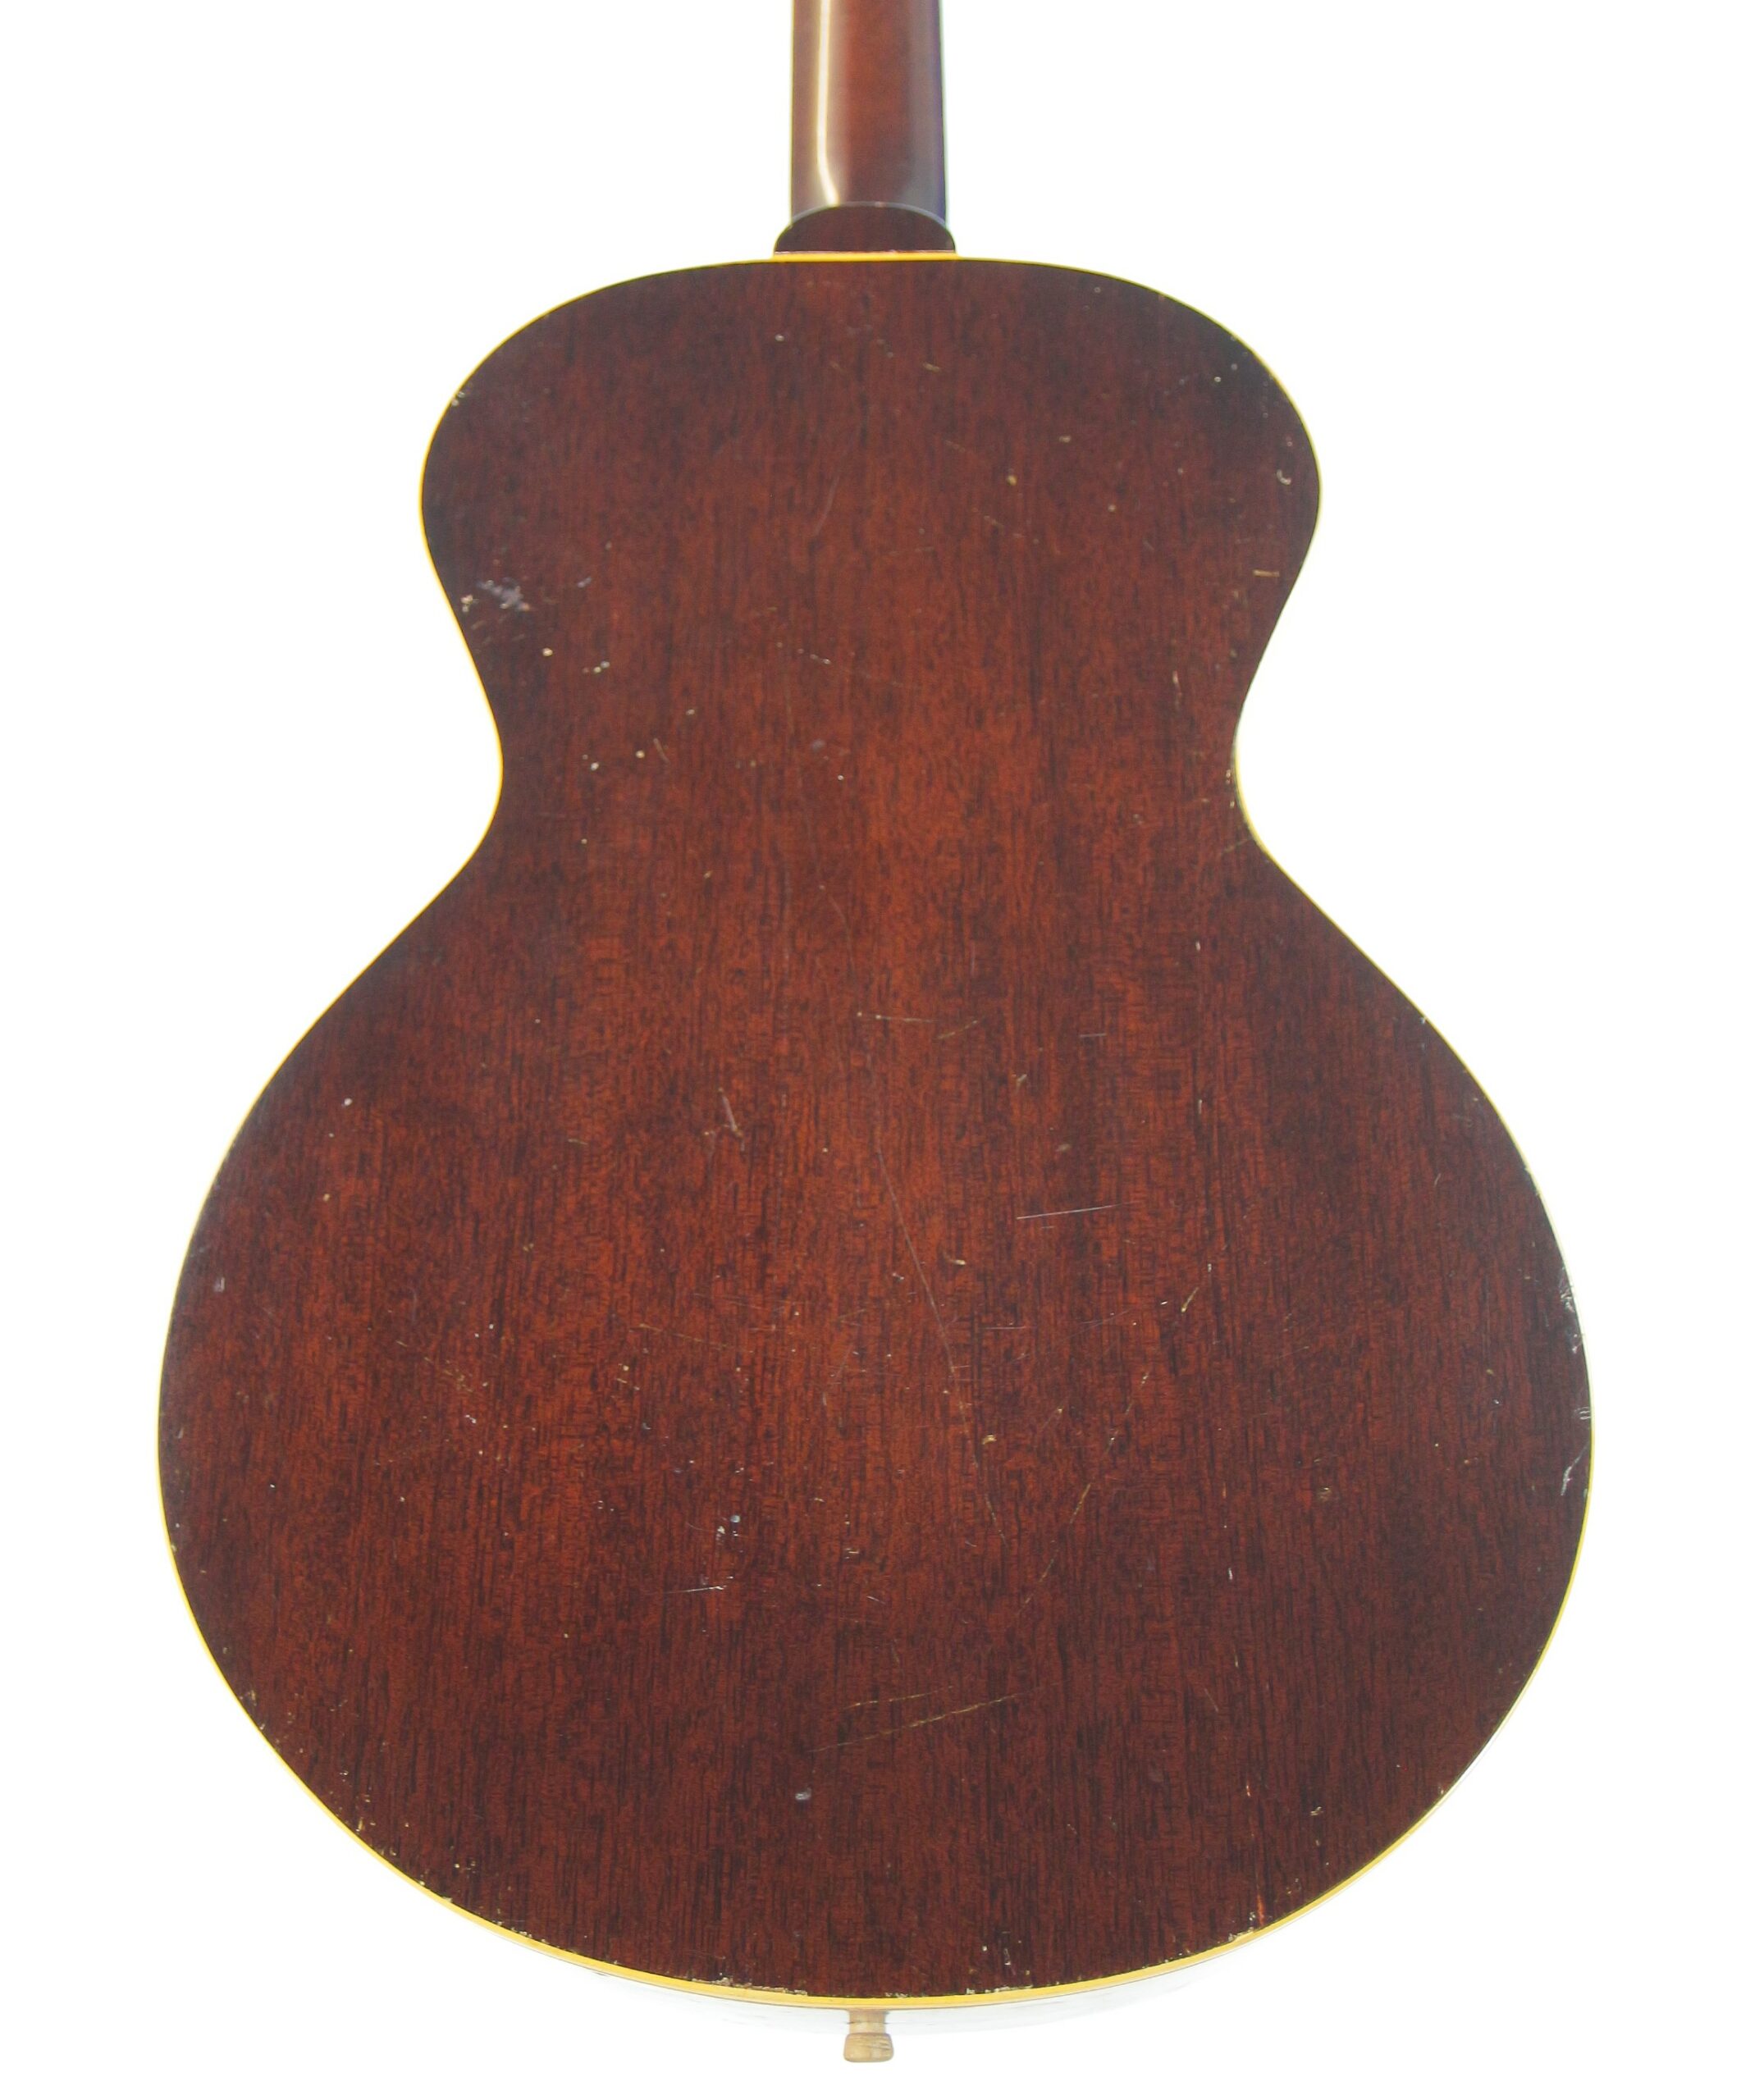 IMG 0127 4 scaled - Gibson LG-2 3/4 1958